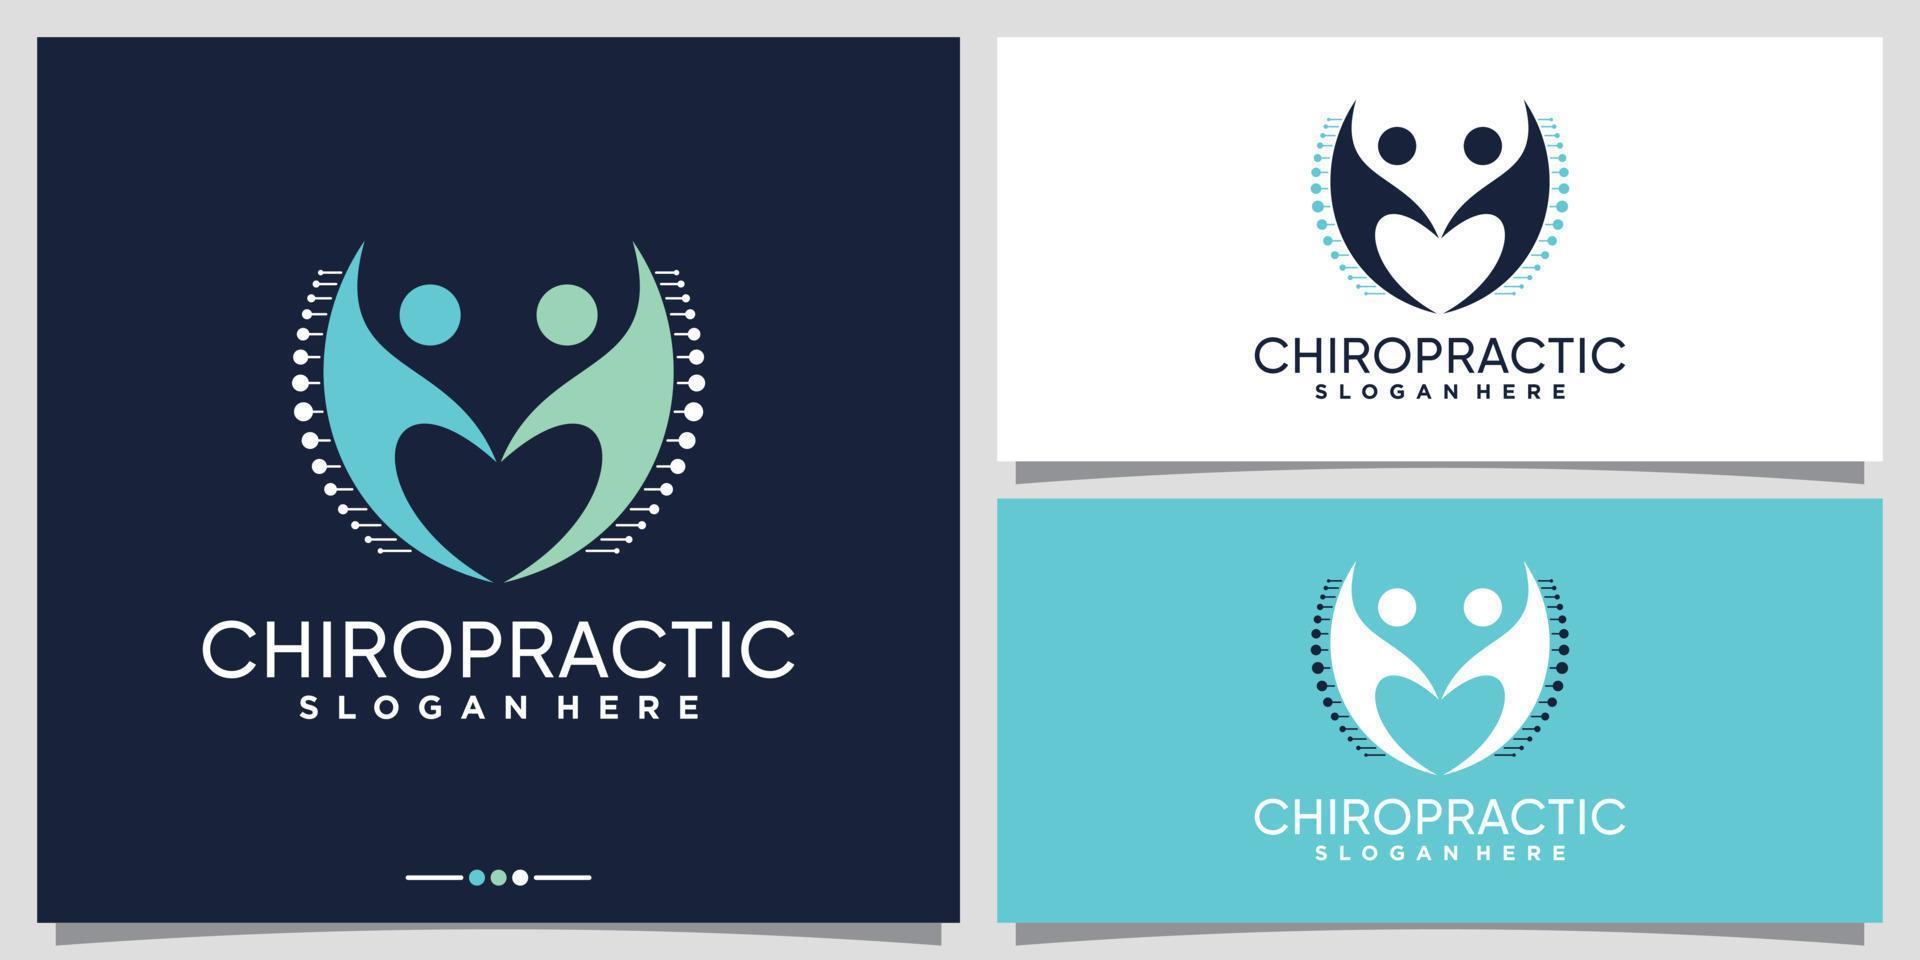 Chiropractic logo design template with unique creative concept Premium Vector